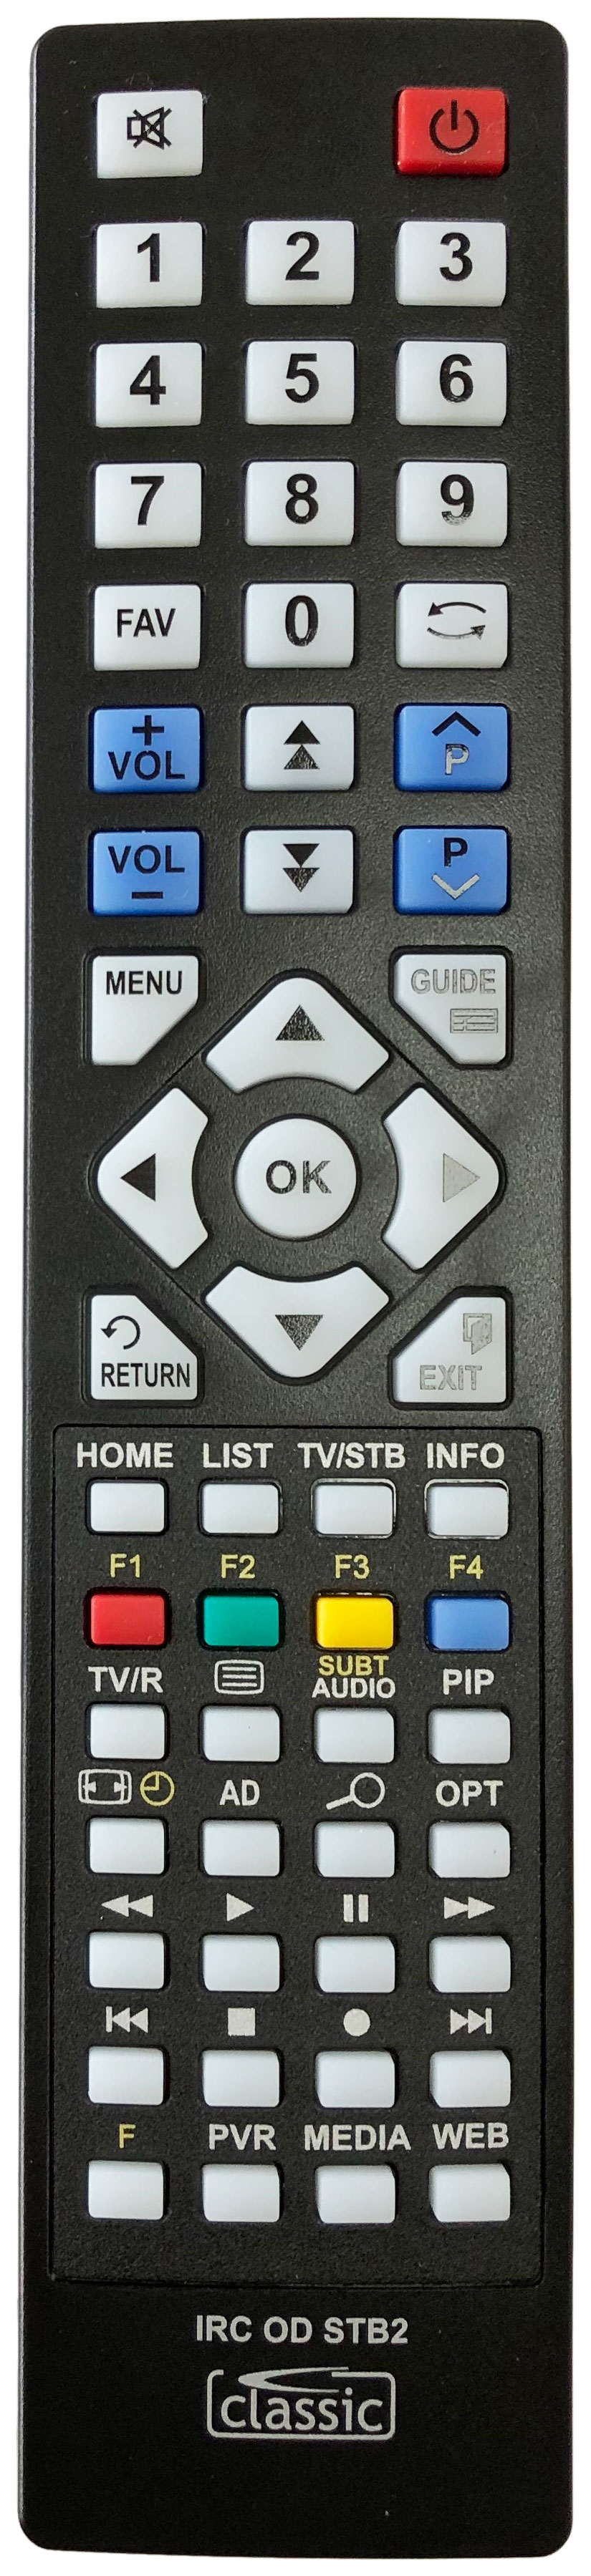 MANHATTAN HDR-S Remote Control